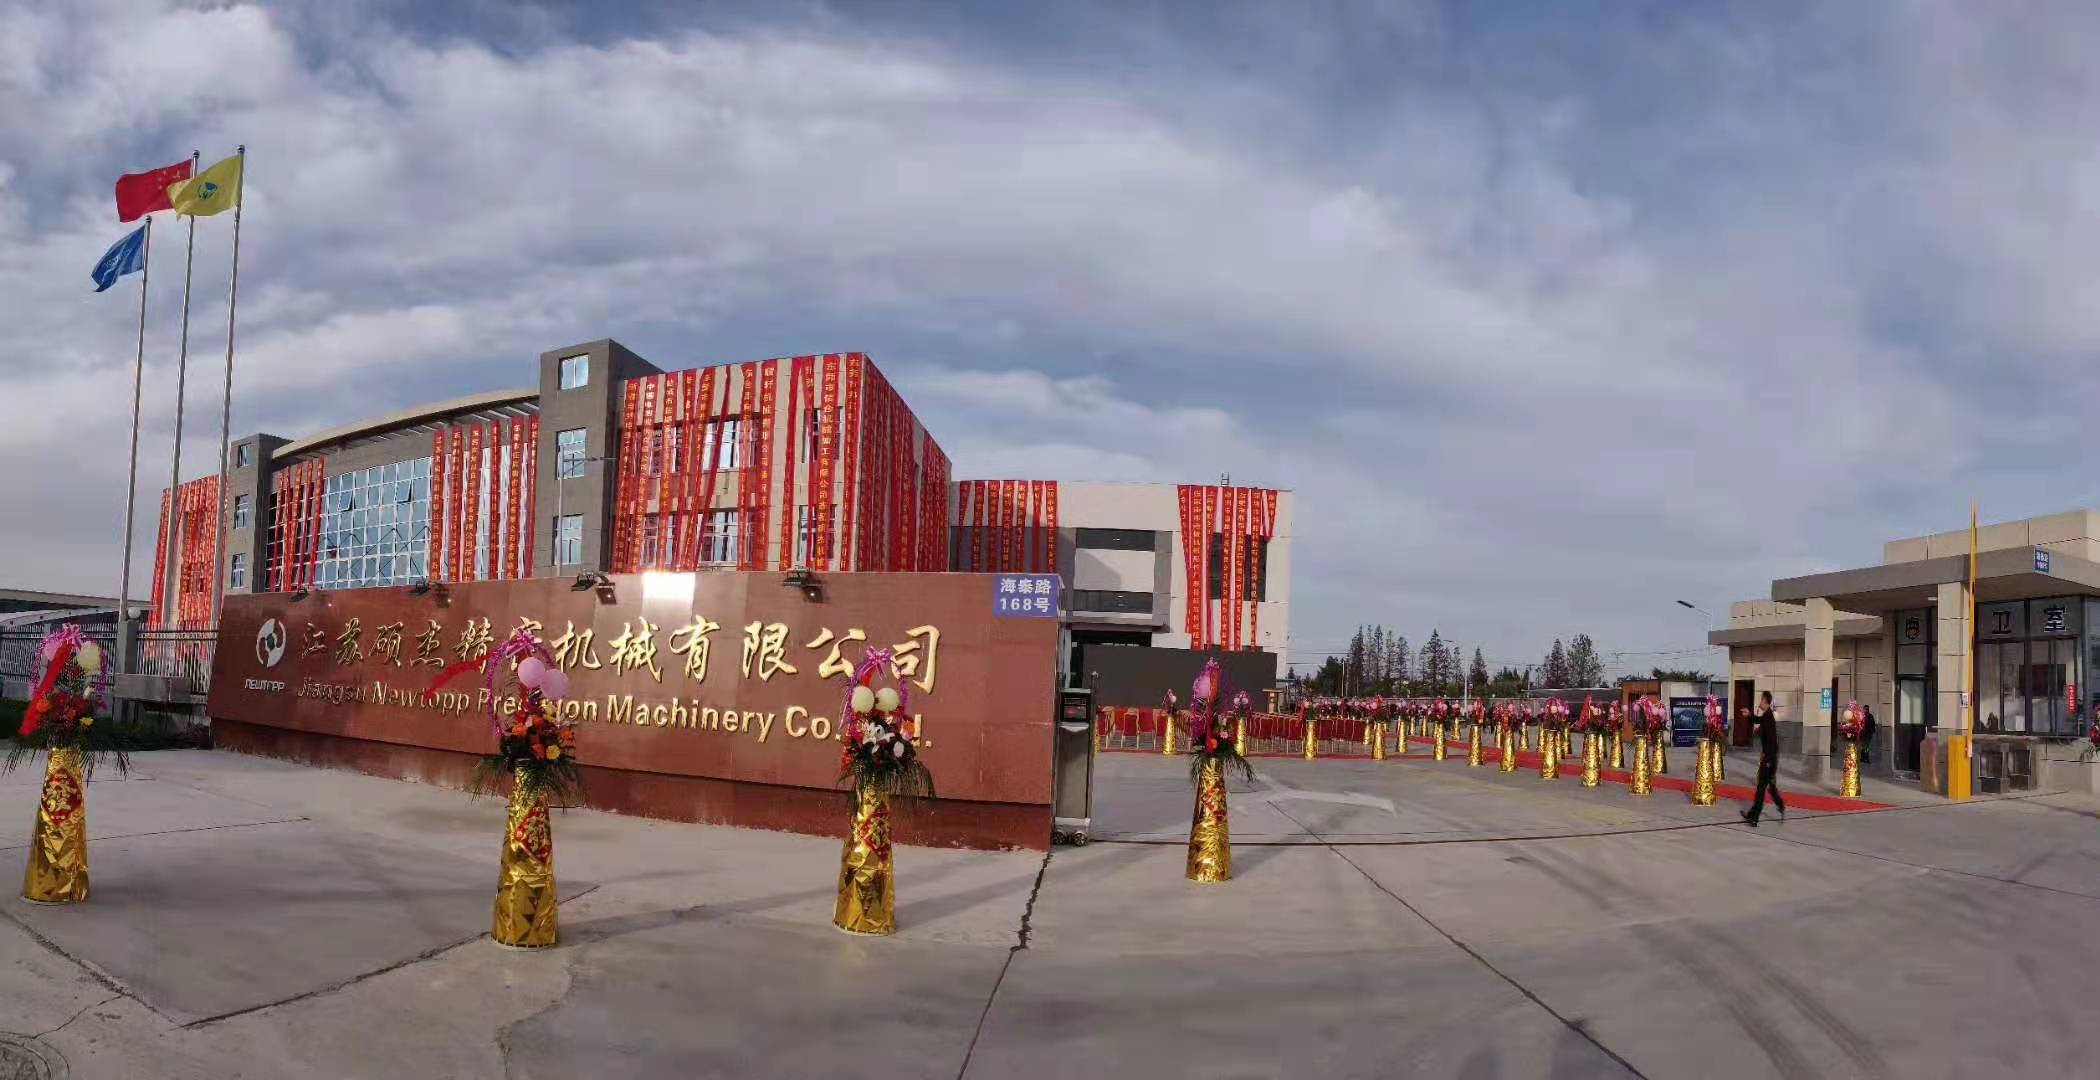 Коцейовск ", семанюк я опубликова Jiangsu Shuojie Precision Machinery Co, Ltd. Официально образован в 2019 году